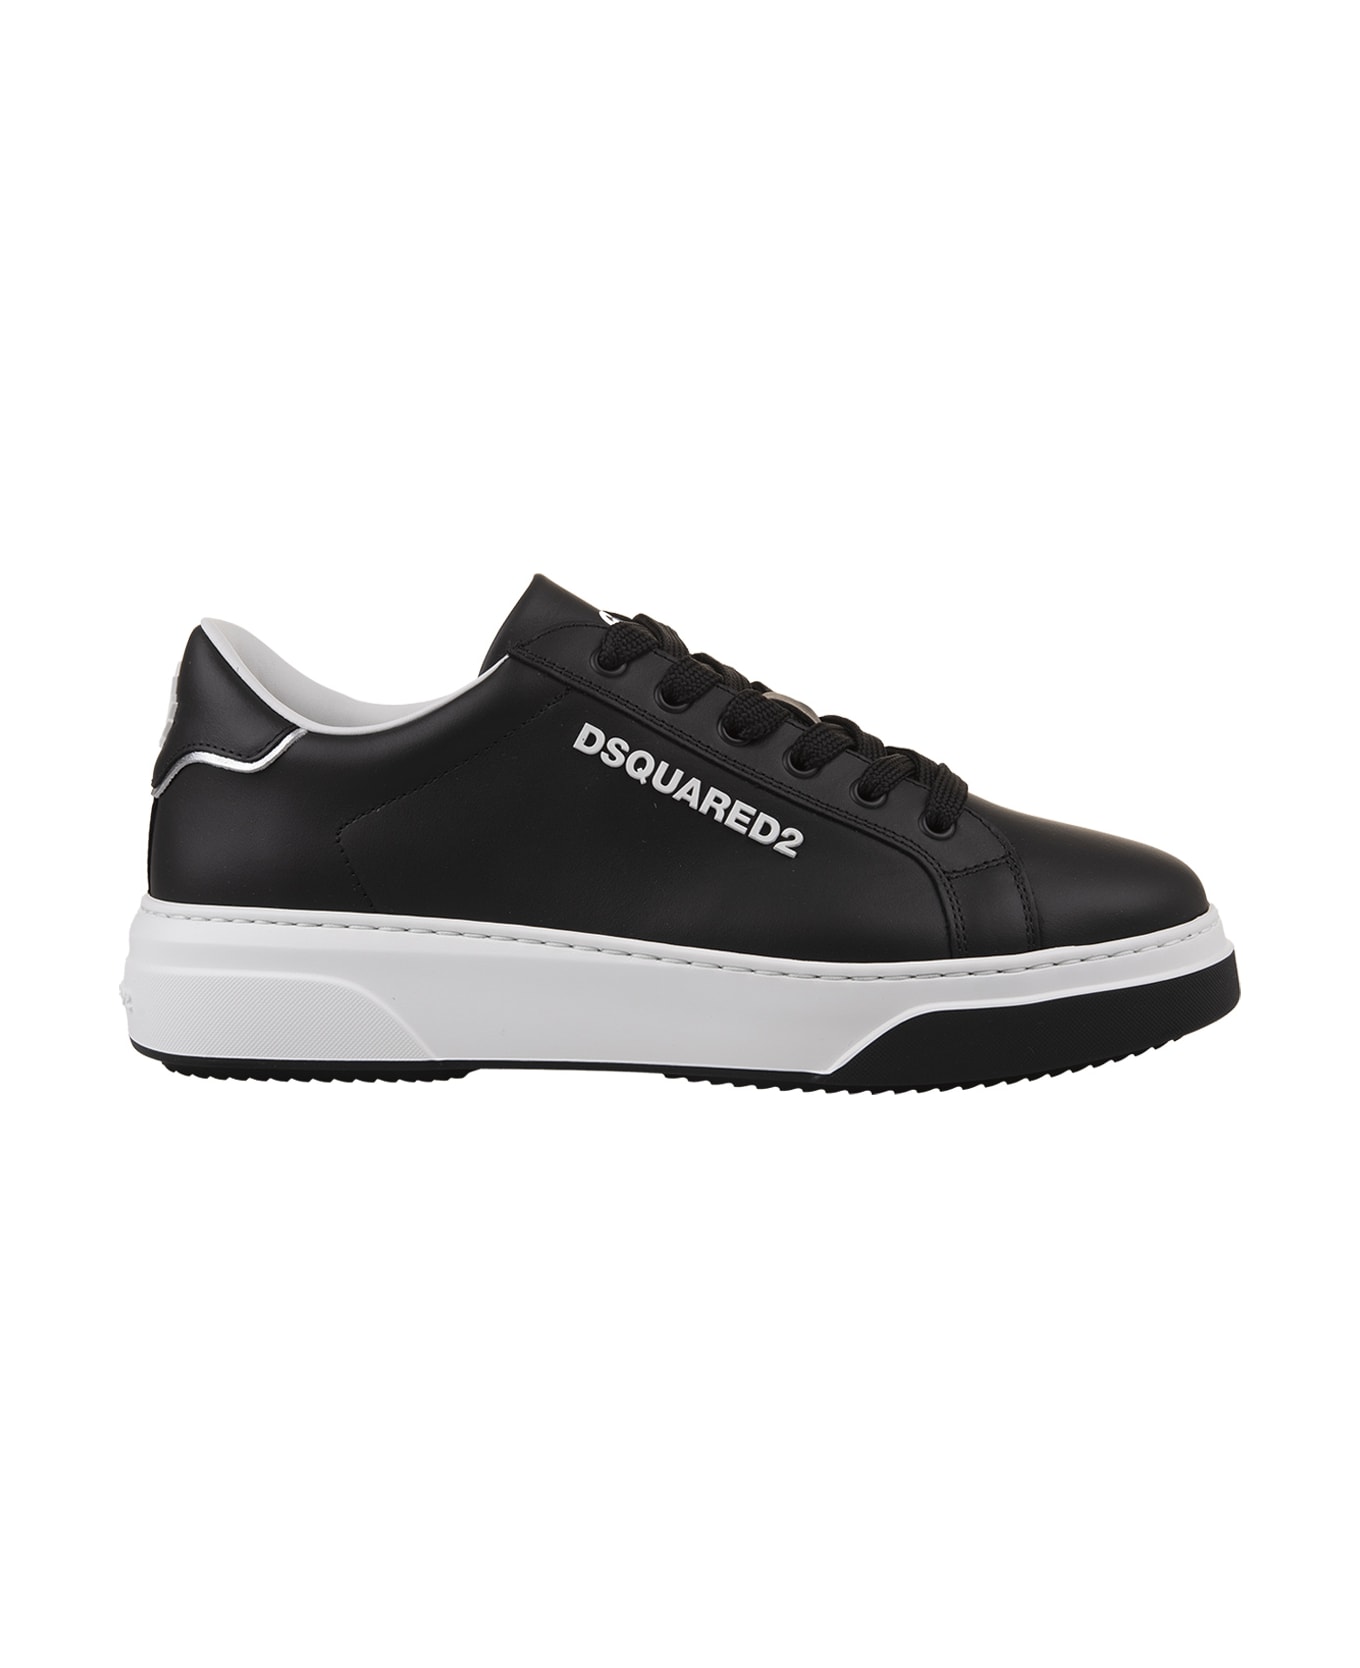 Dsquared2 Black "1964" Sneakers - Black スニーカー